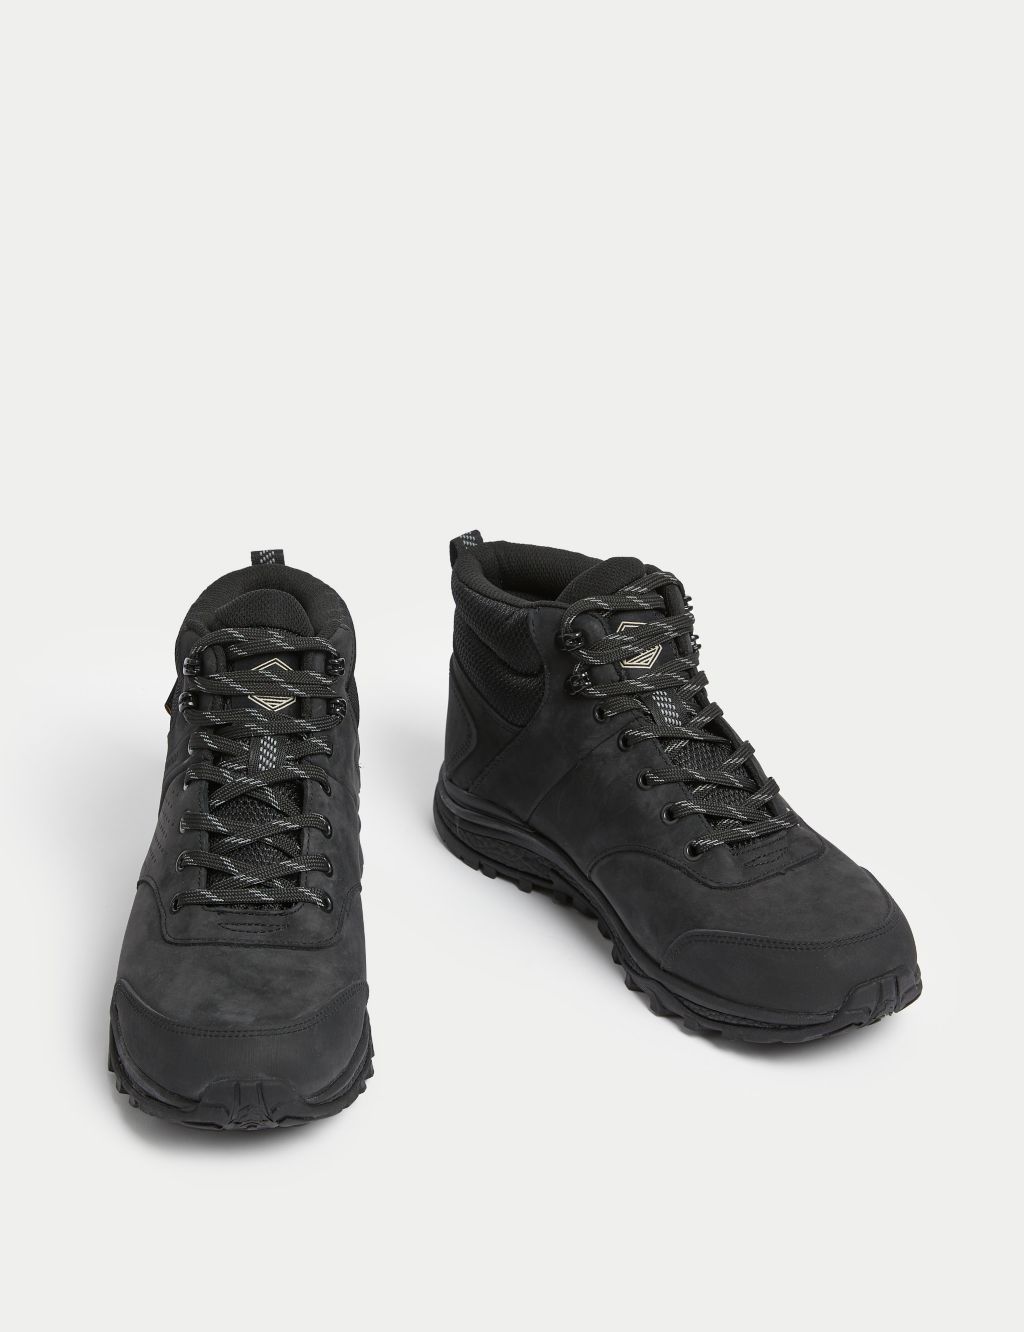 Leather Waterproof Walking Boots image 2